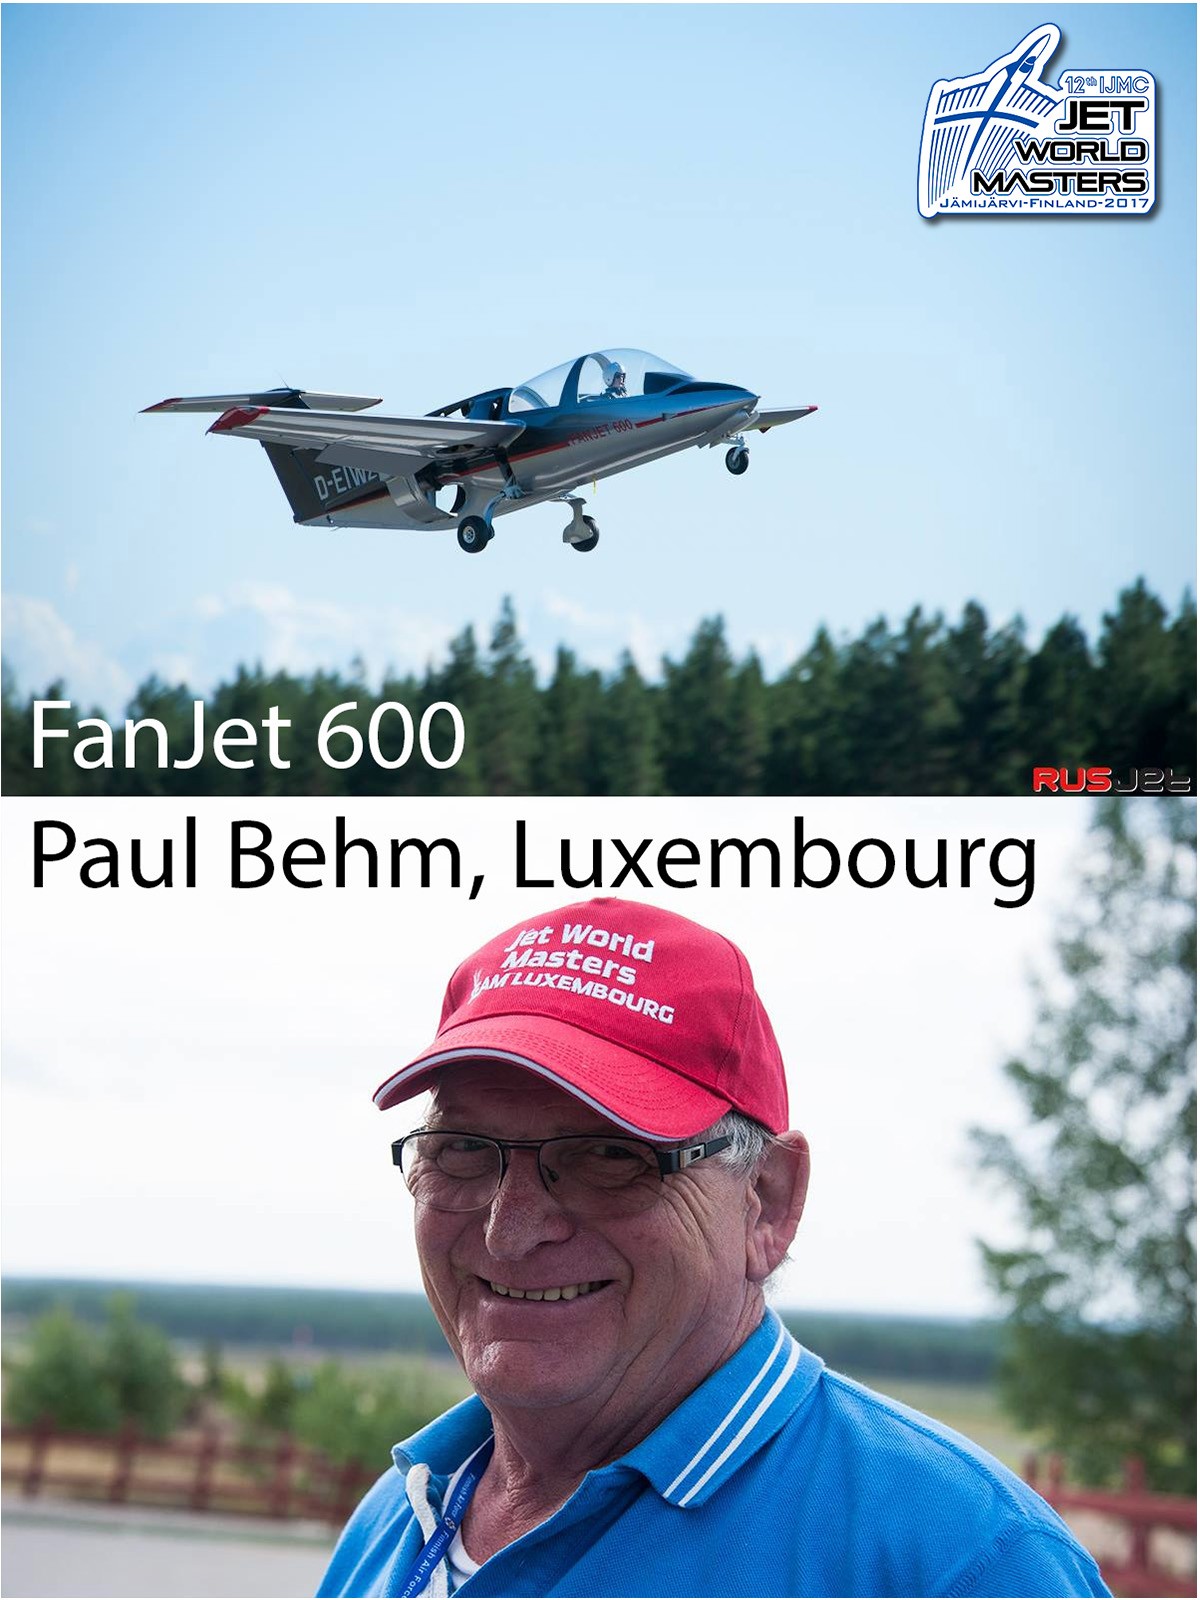 Luxembourg Paul Behm.jpg(98.3 KB)